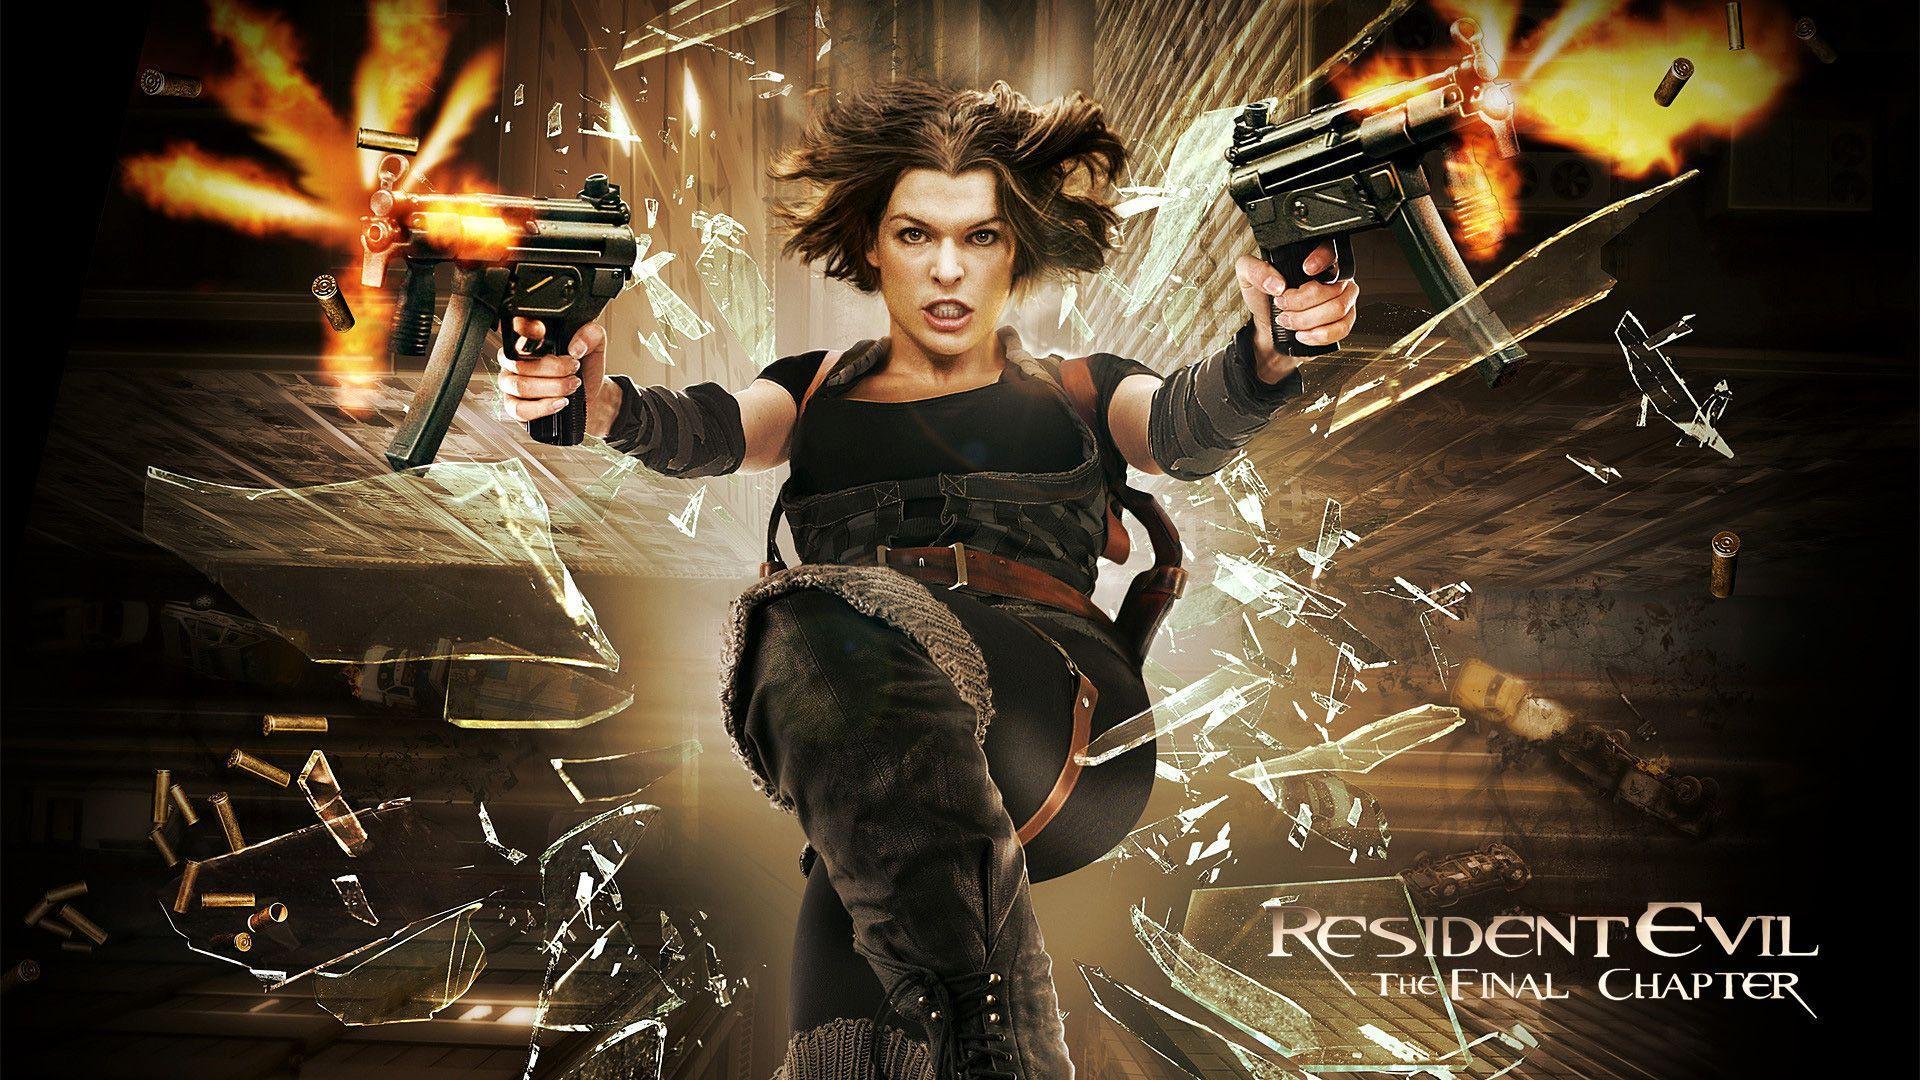 Resident Evil 6 wallpaper HD film poster 2017 Free HD Wallpaper